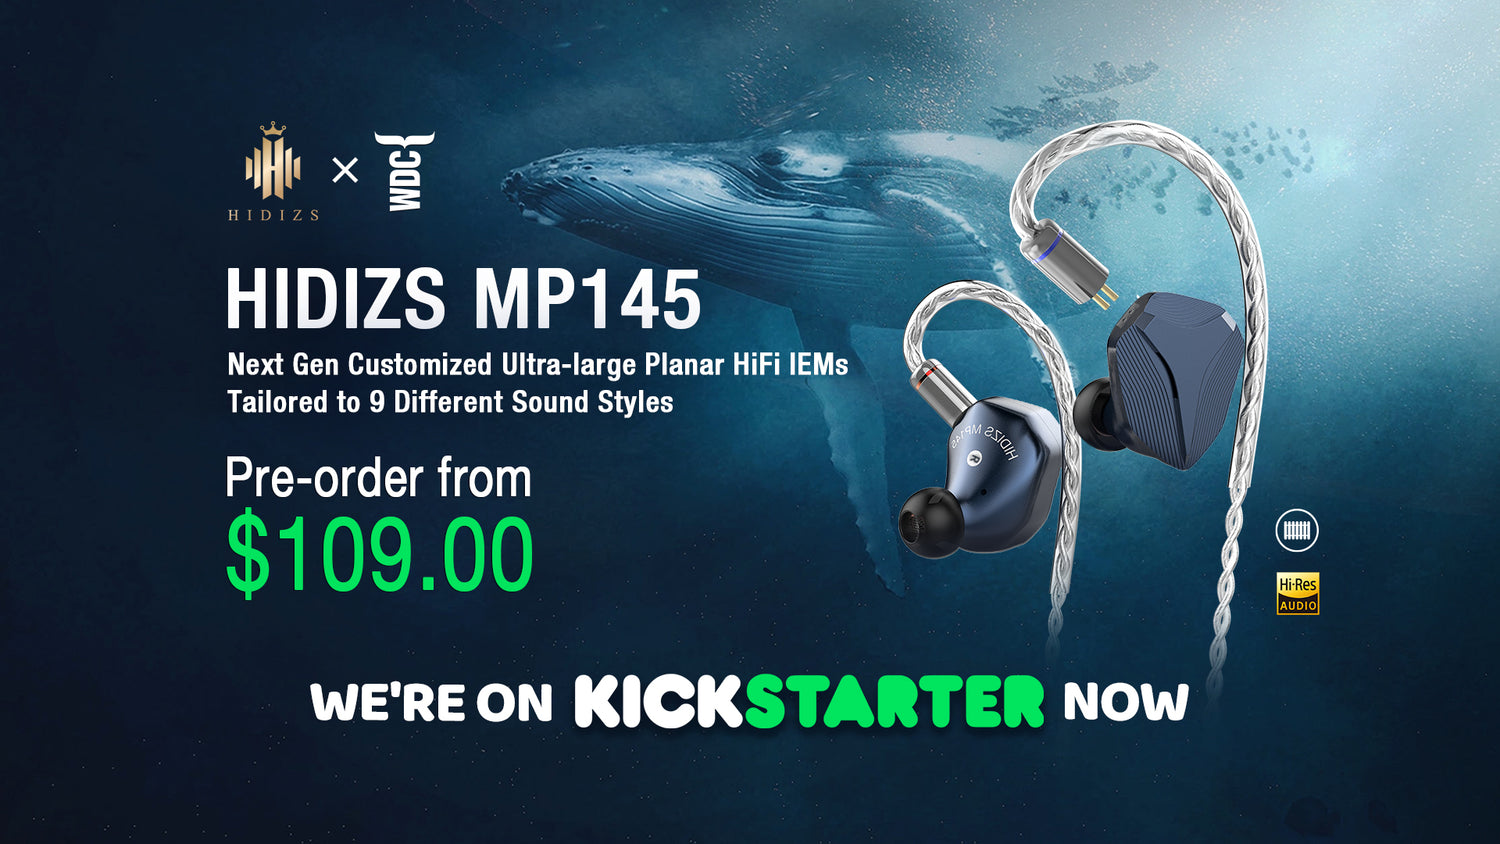 Hidizs MP145: The Next Gen Customized Ultra-large Planar HiFi In-ear Monitors Live On Kickstarter